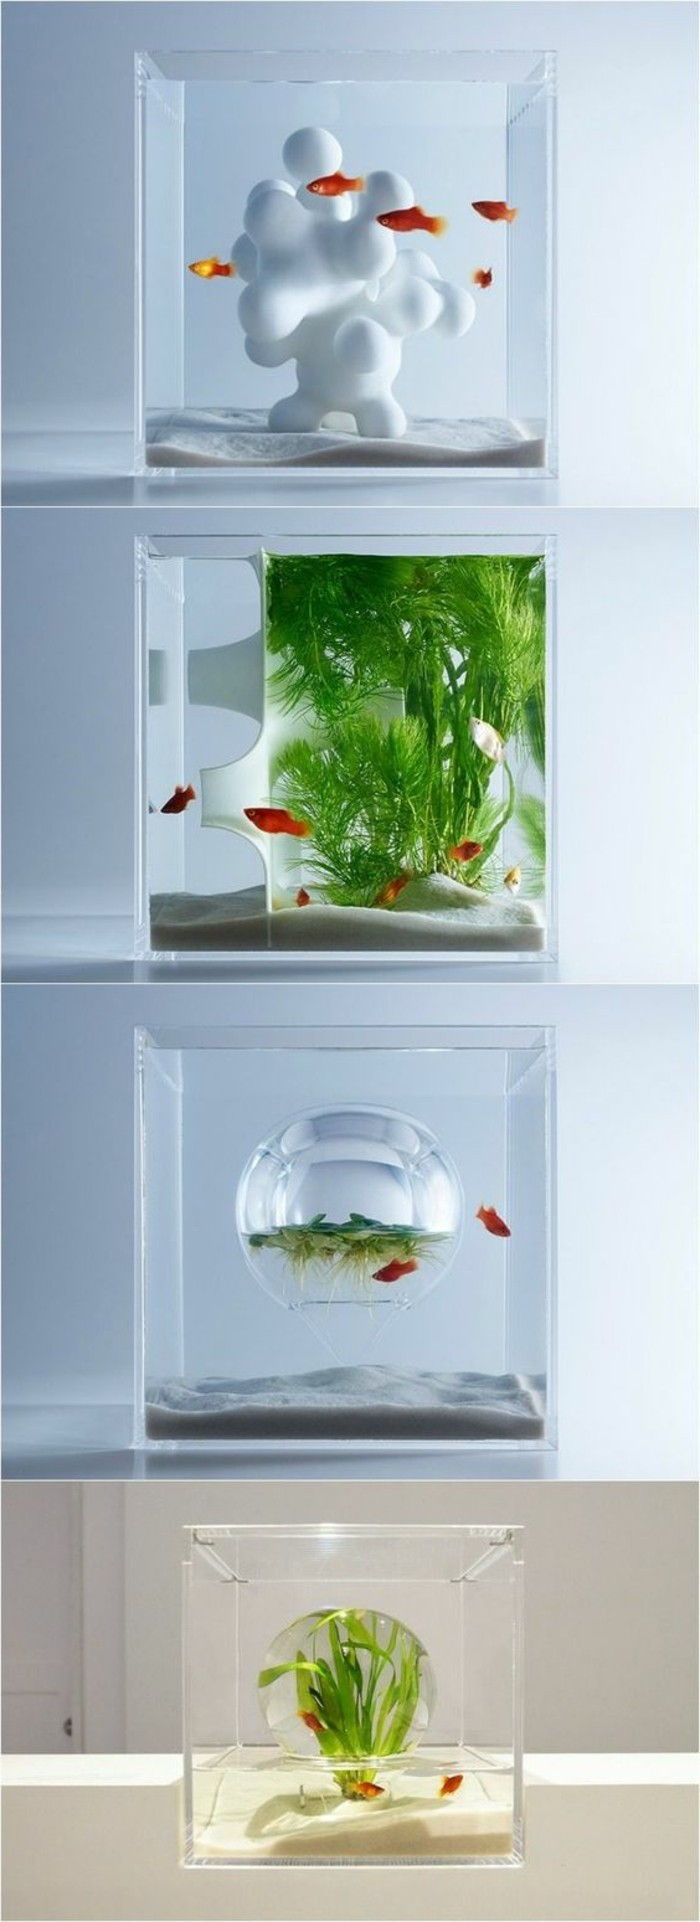 akvarium-deco-akvarium-för-guldfisk-set-sand-vatten-växt-small-akvarium-akvarium-anordning